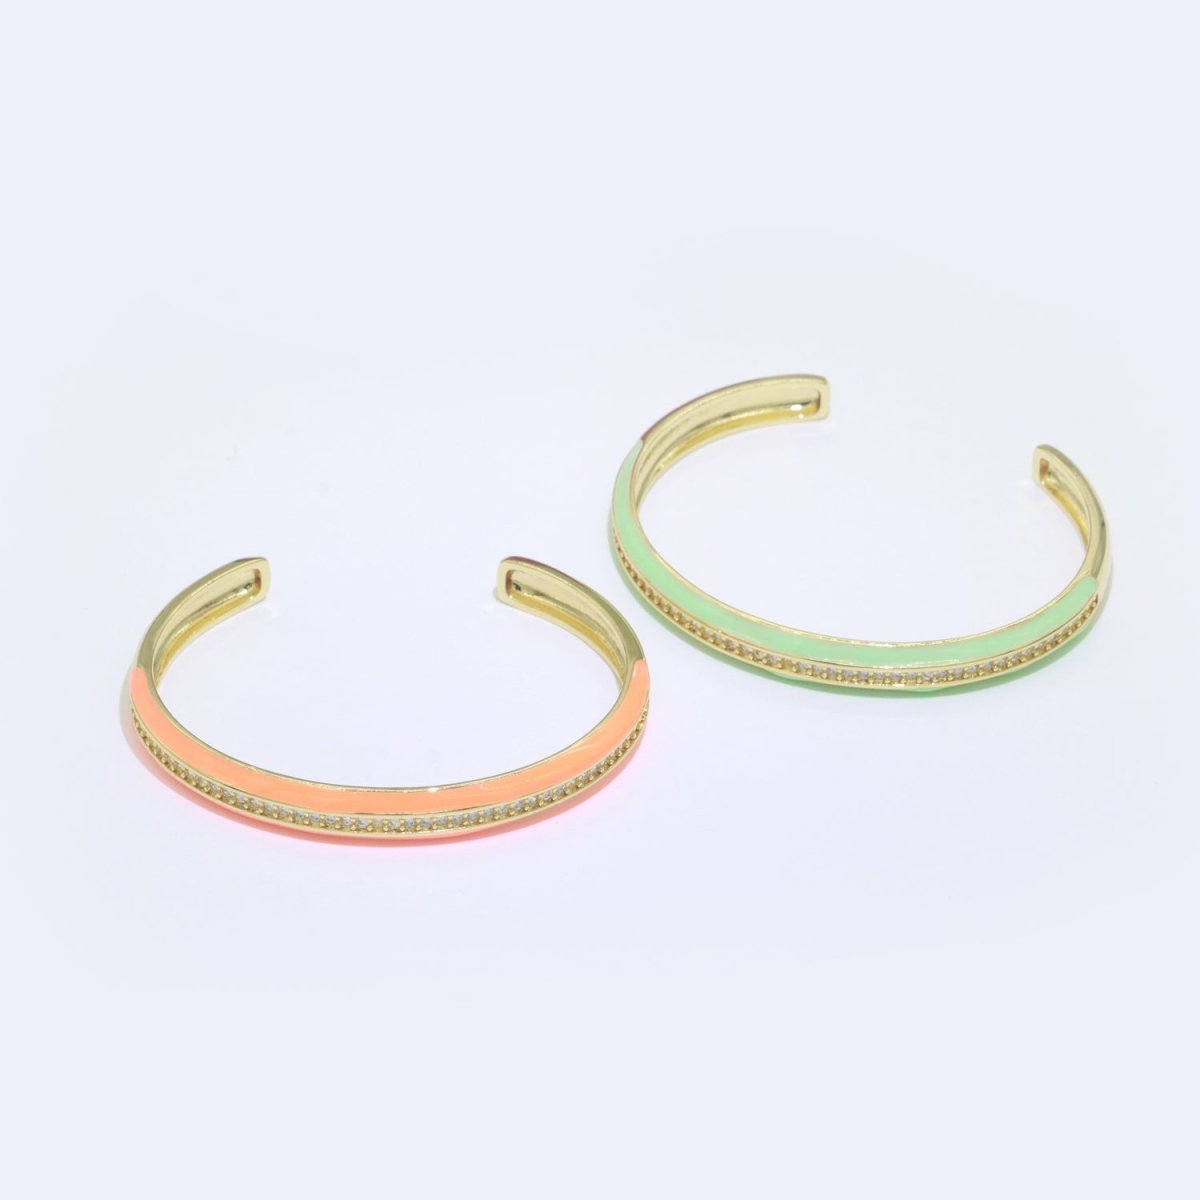 24K Gold Filled Enamel Cuff Bracelet Wholesale Fashion Jewelry | WA-073 to WA-082 Clearance Pricing - DLUXCA